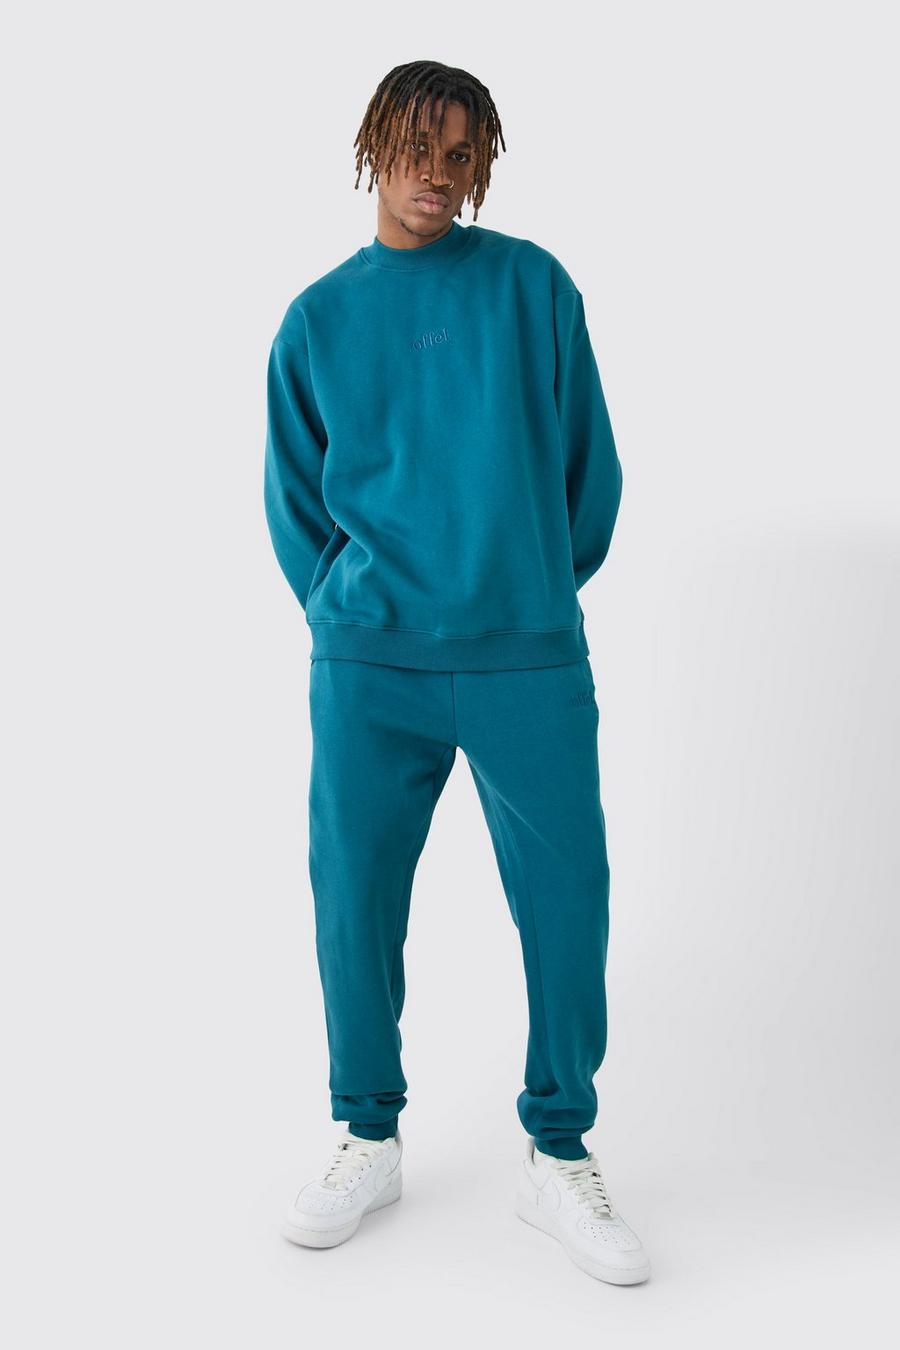 Dark blue Tall Offcl Oversized Extended Neck Sweatshirt Tracksuit